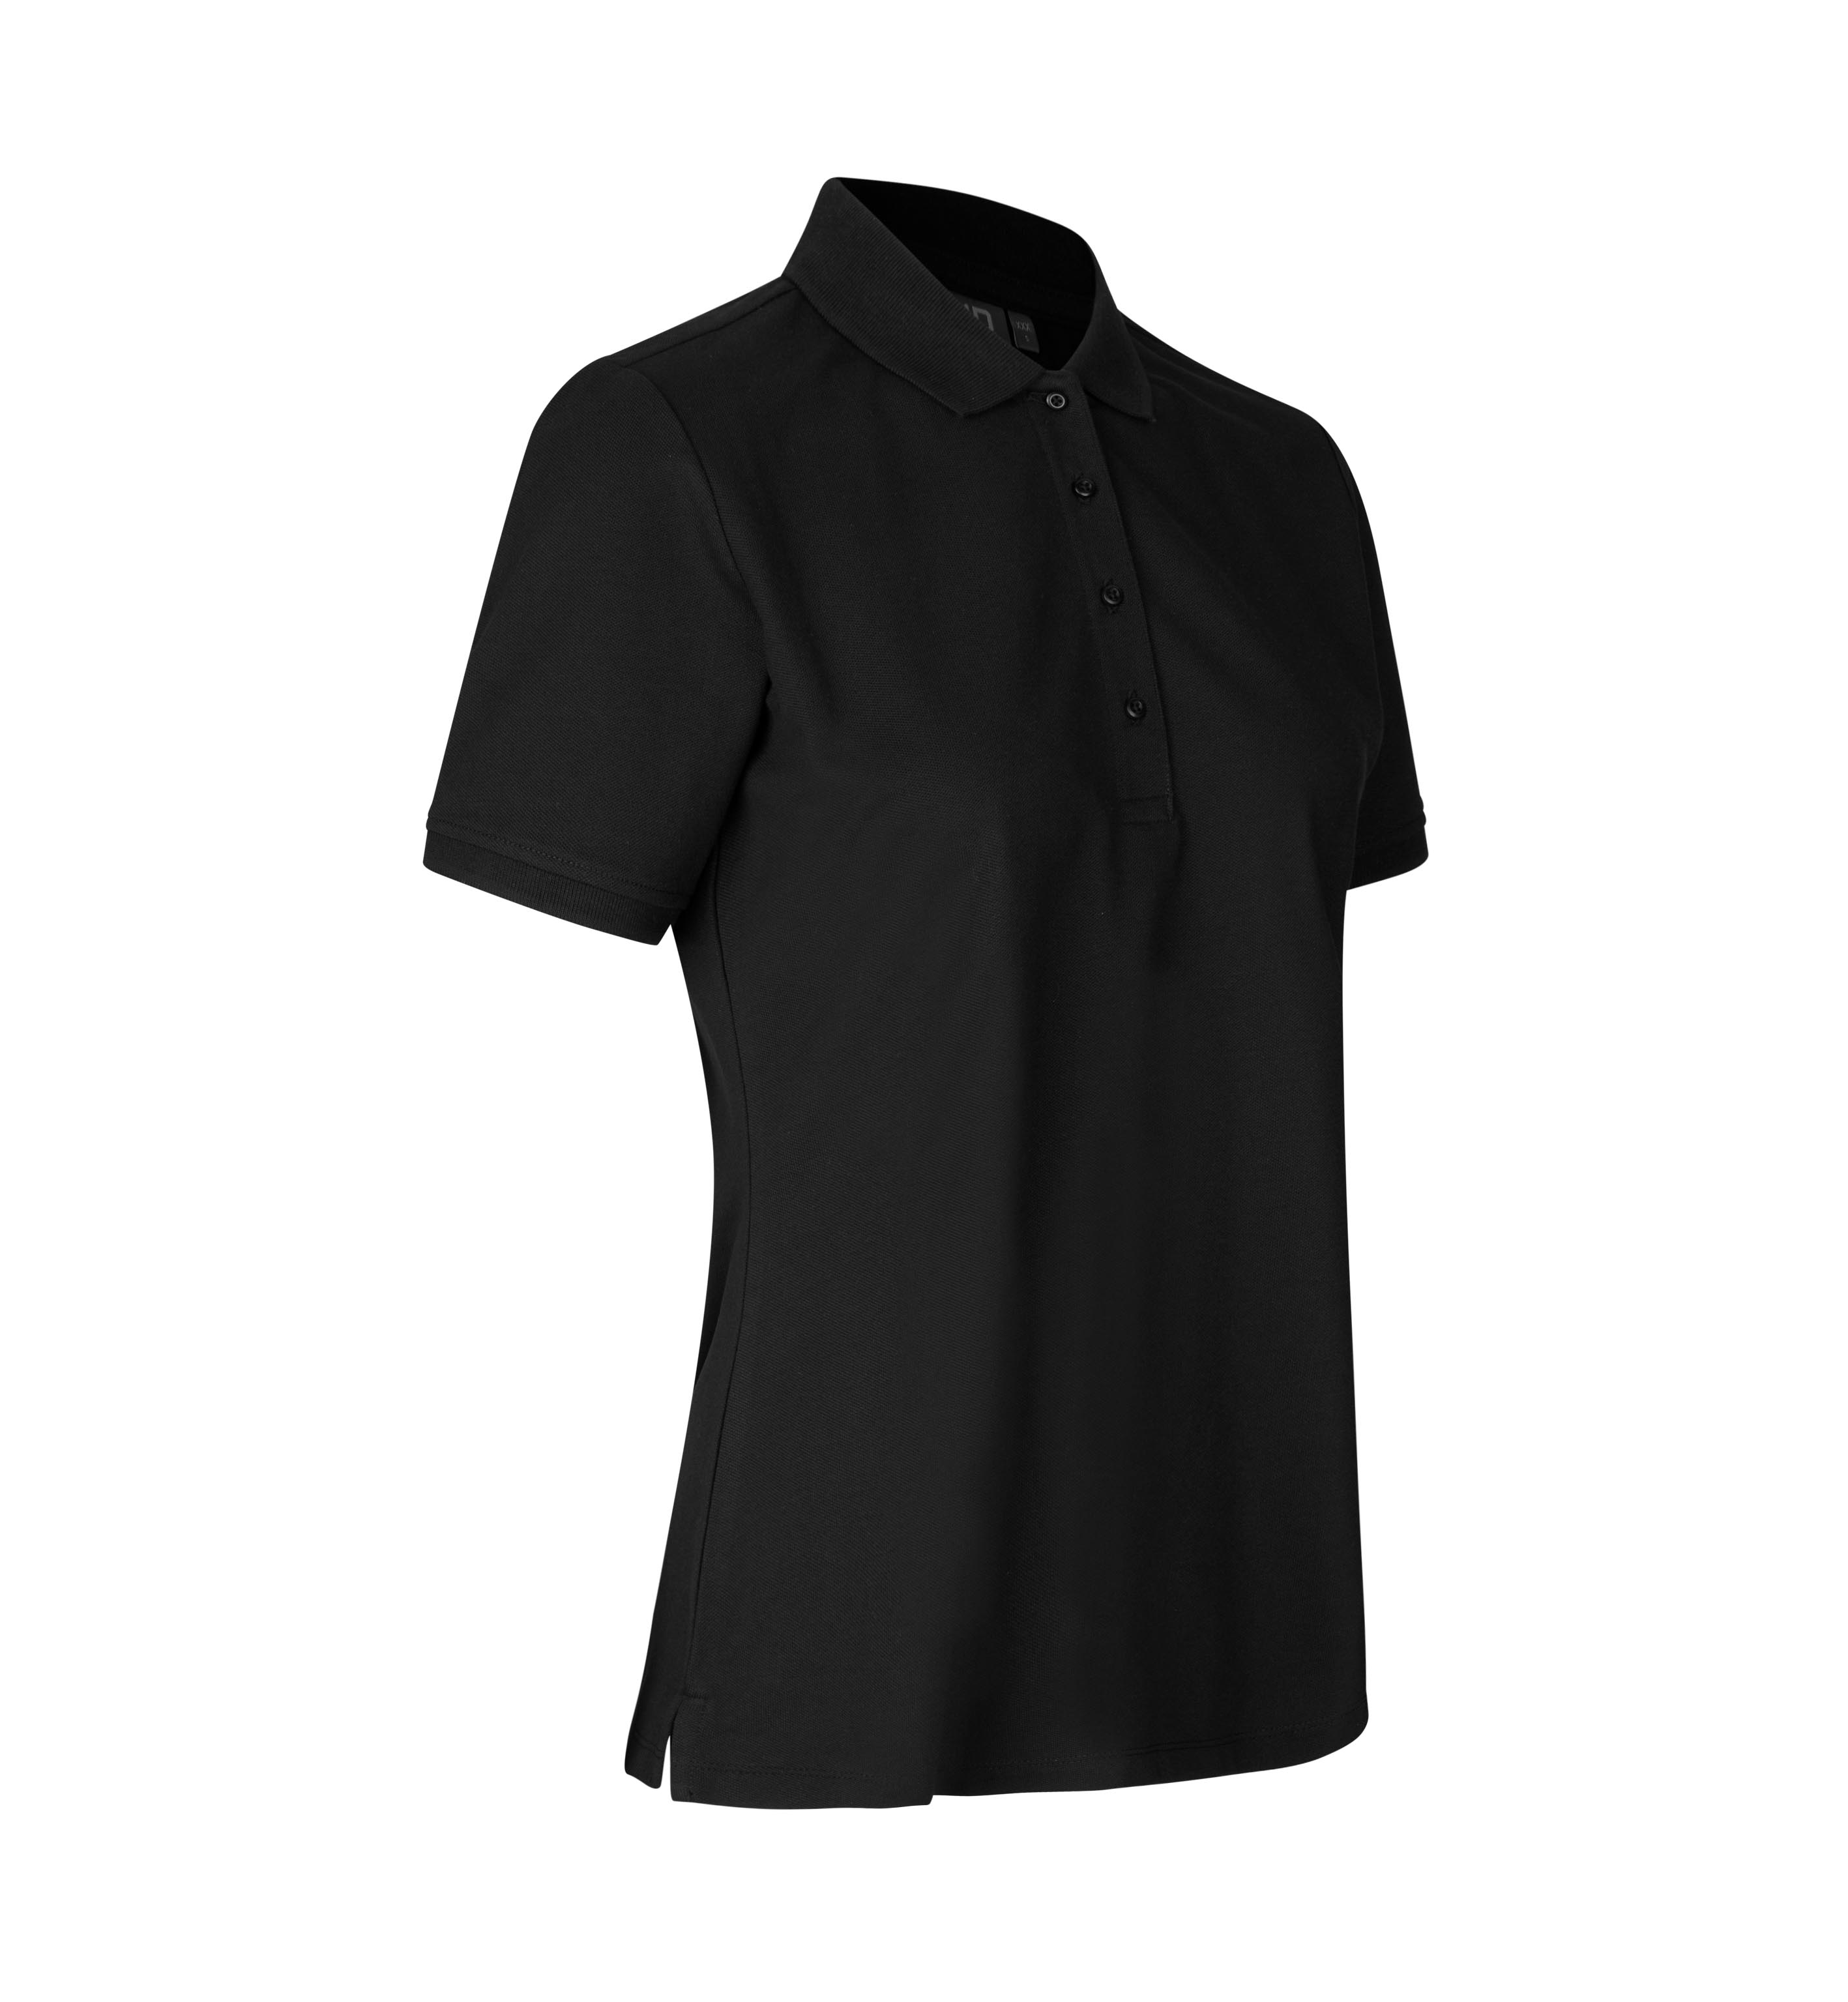 PRO Wear ladies classic CARE polo shirt 210-220 g/m² ID Identity®.